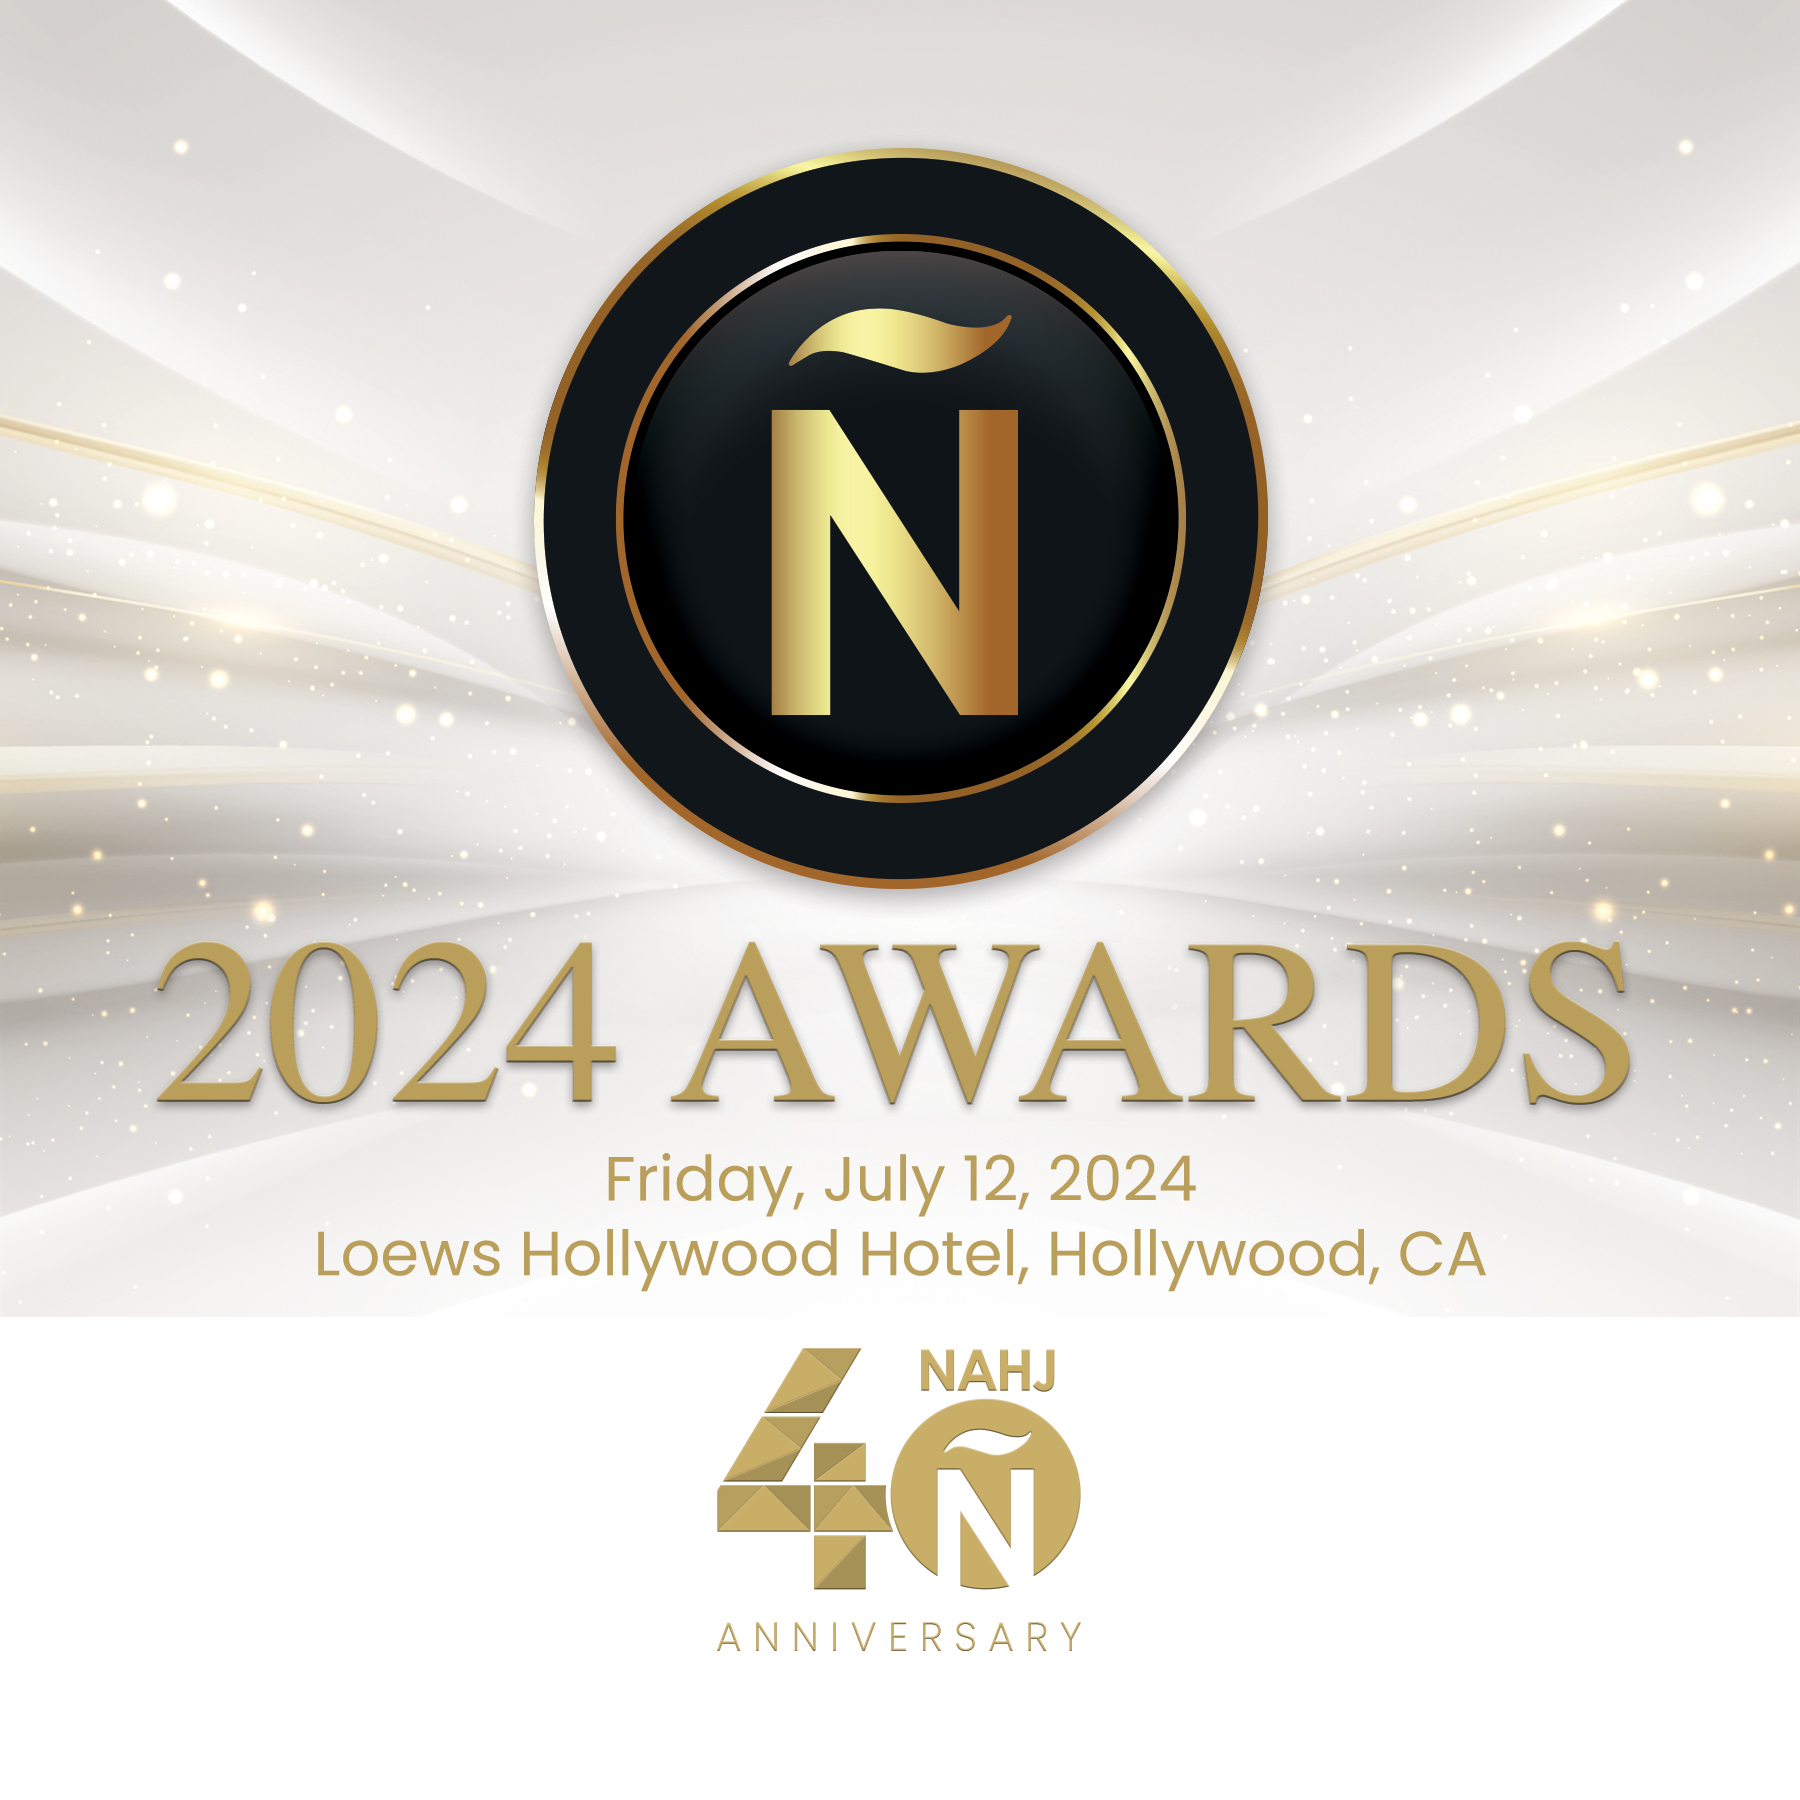 Deadline to Apply: NAHJ 2024 Ñ Awards